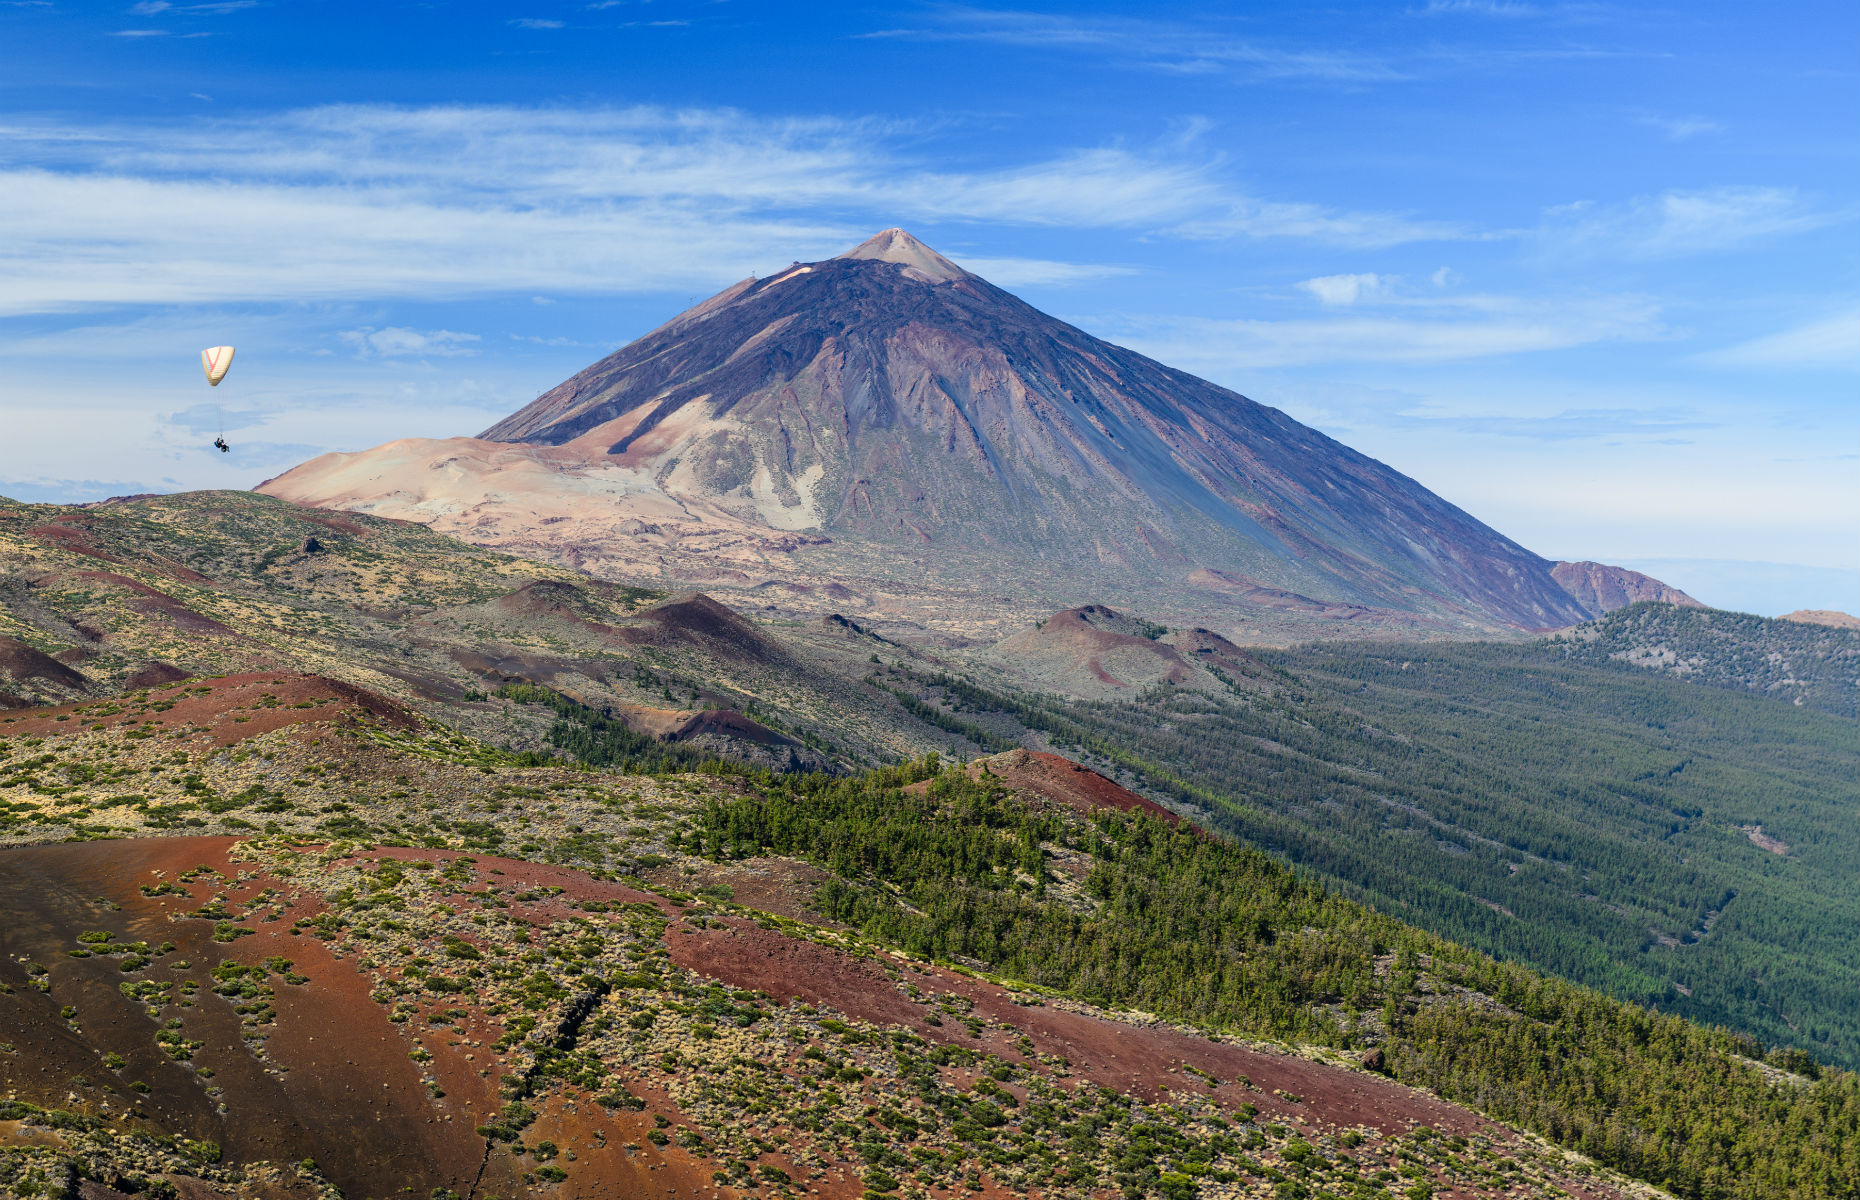 Mount Teide (Image: alexilena/Shutterstock)